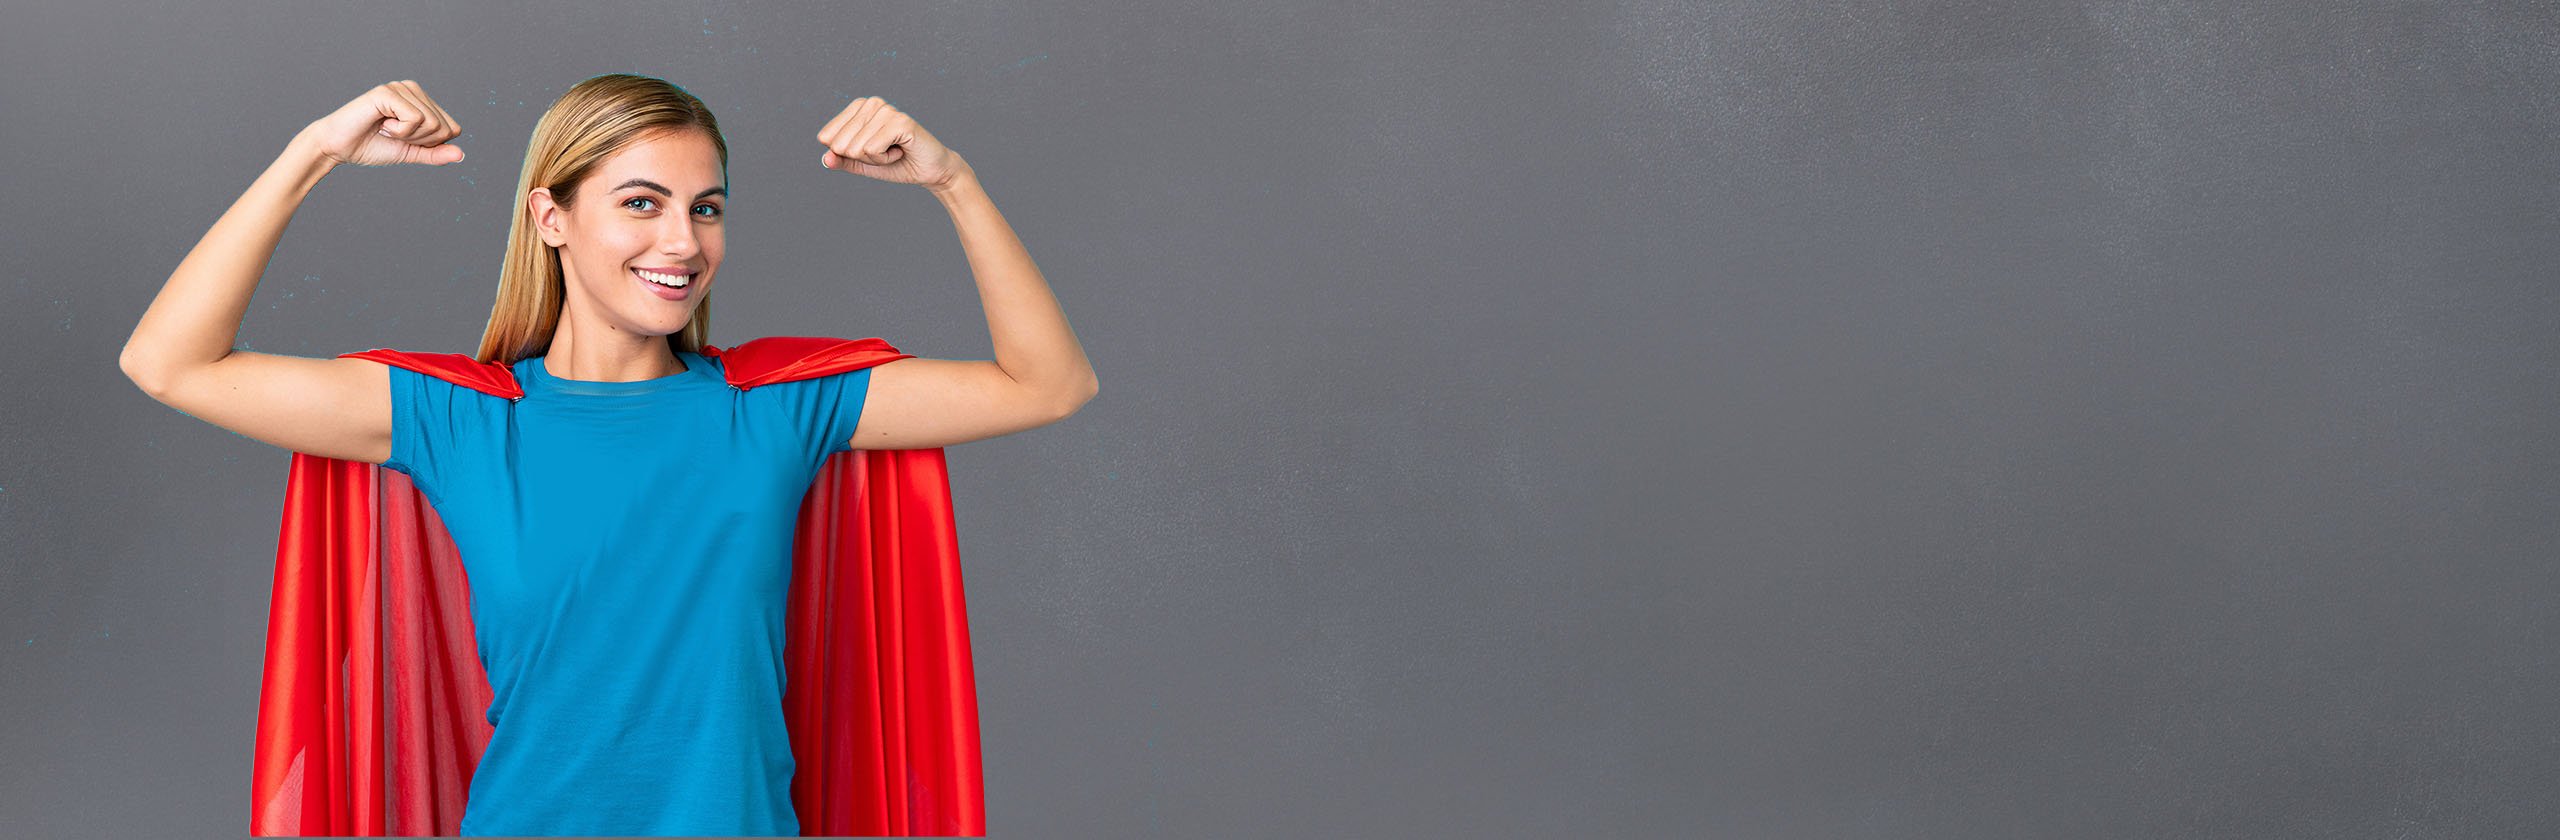 Junge Frau mit rotem Superman-Umhang in Heldenposition